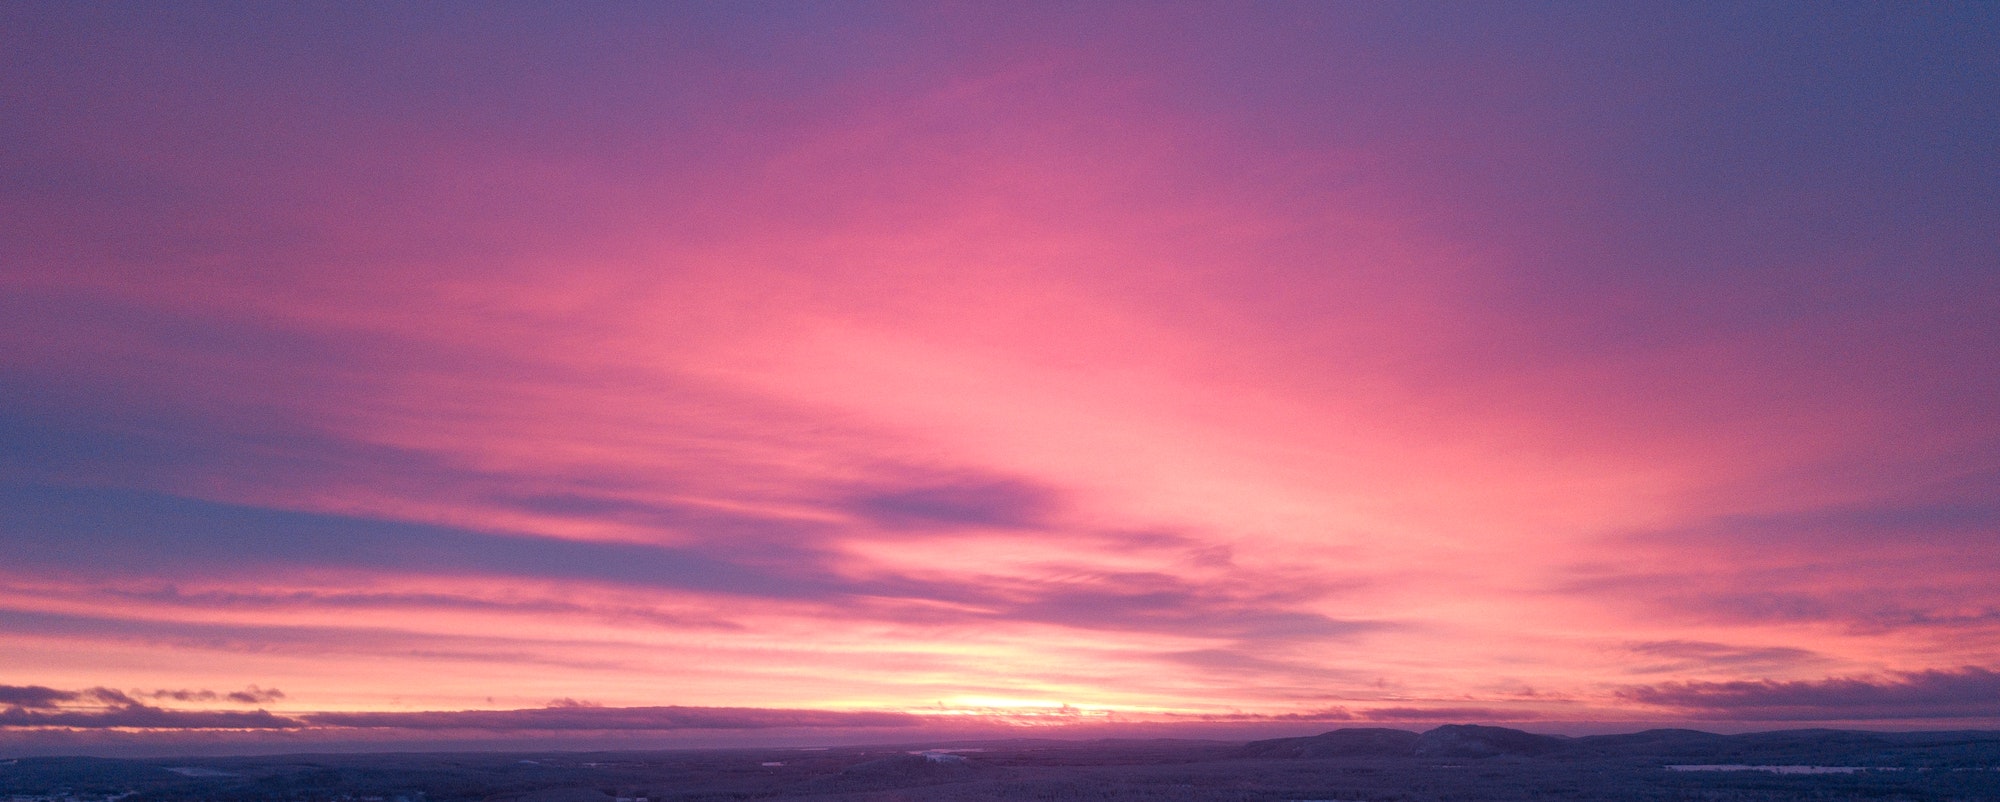 Pink Polar stratospheric clouds